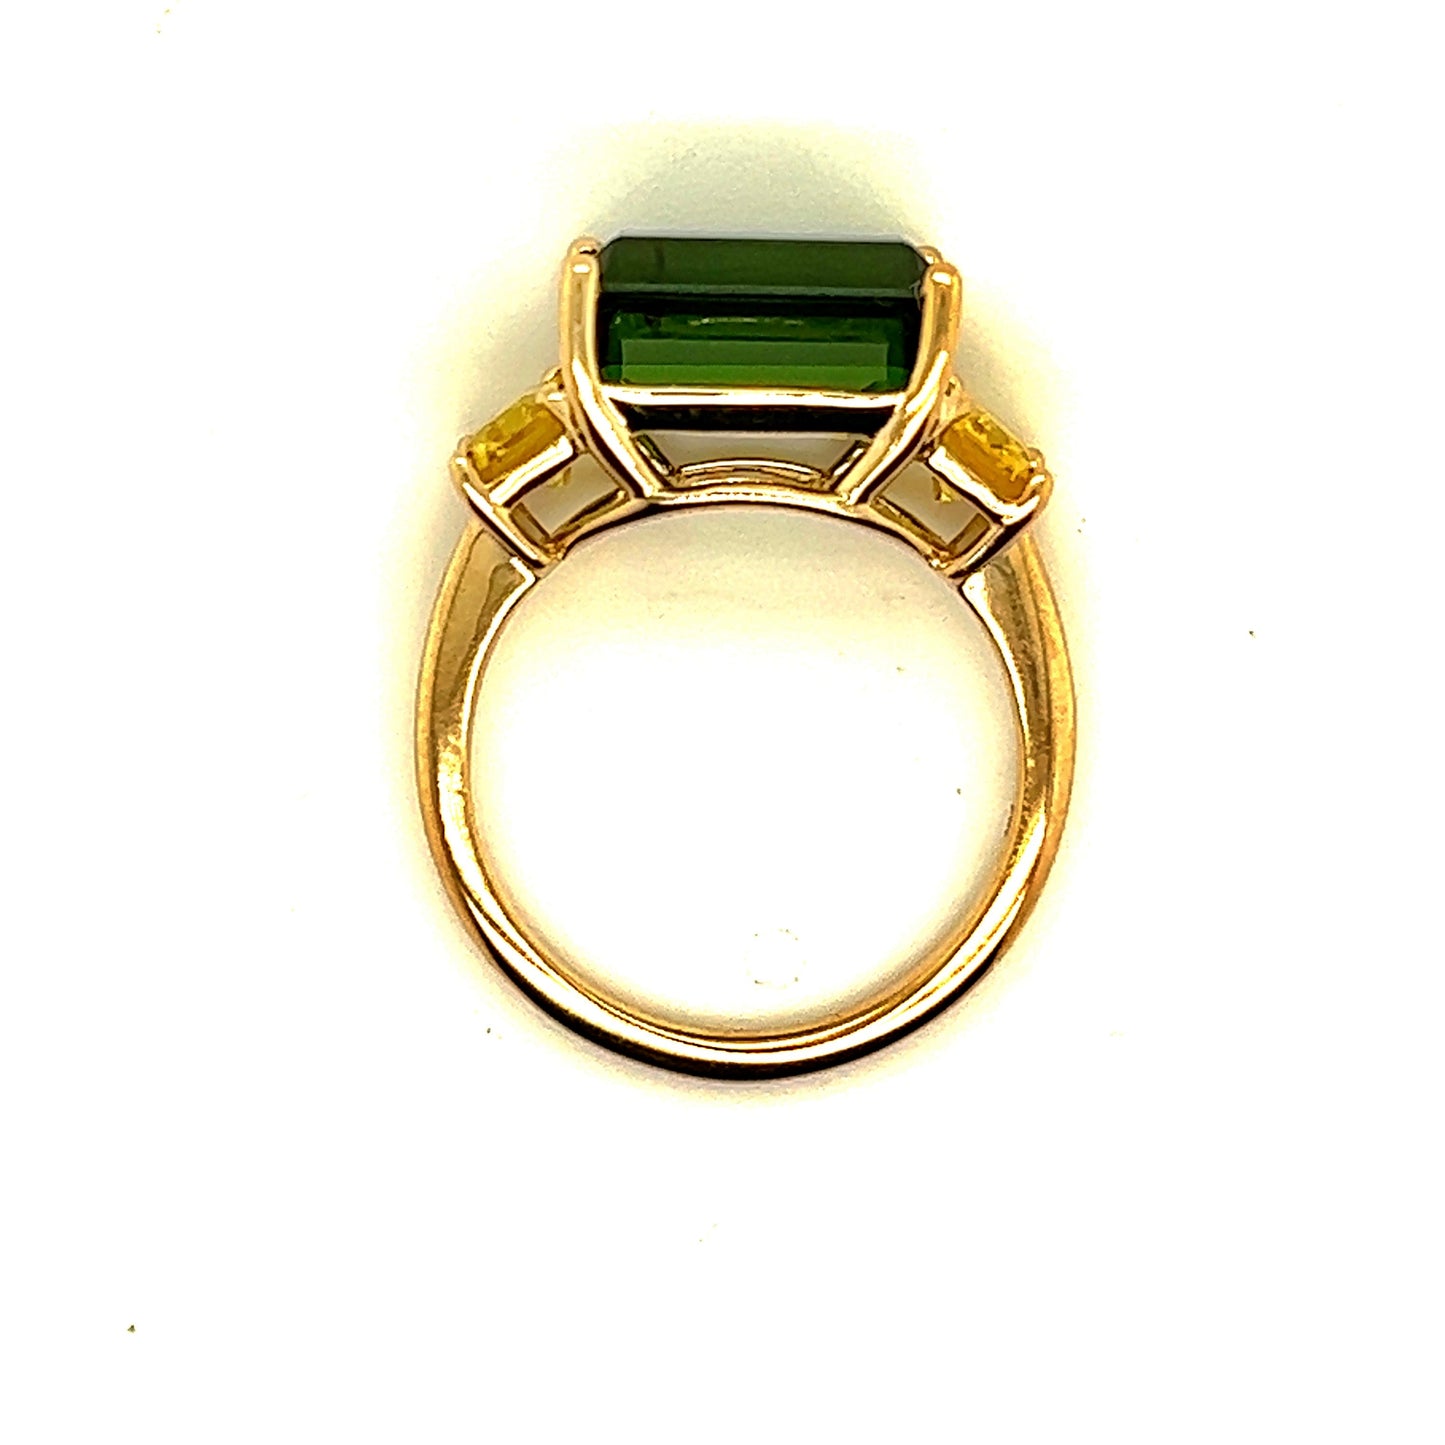 Natural Tourmaline Diamond Ring Size 7 14k Y Gold 6.15 TCW Certified $5,975 219225 - Certified Fine Jewelry